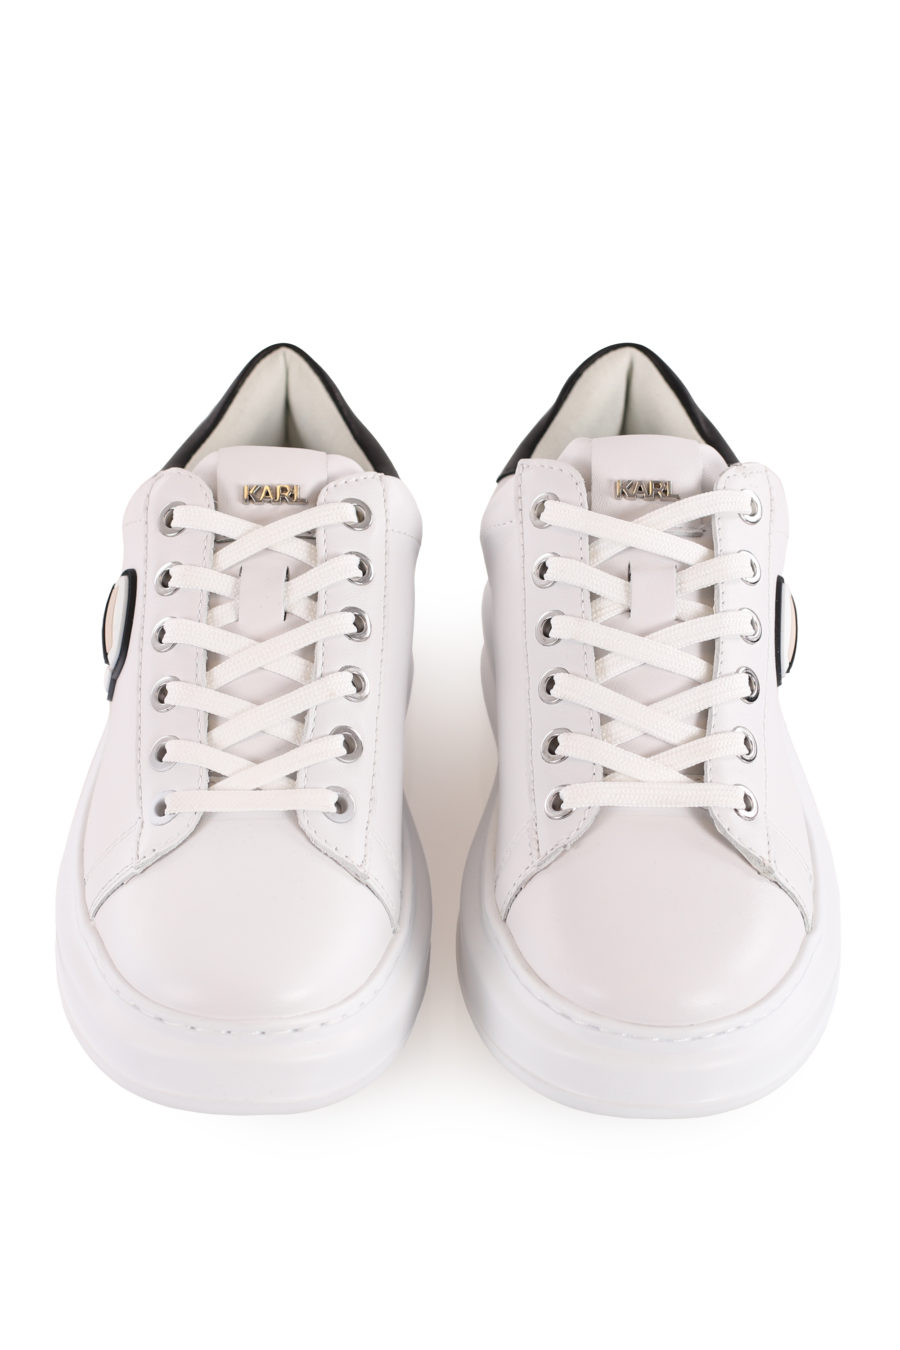 Zapatillas blancas con logotipo "Karl Ikonic" - 9aac5bb49d32678bb6276ba1bdadee35bfa35551